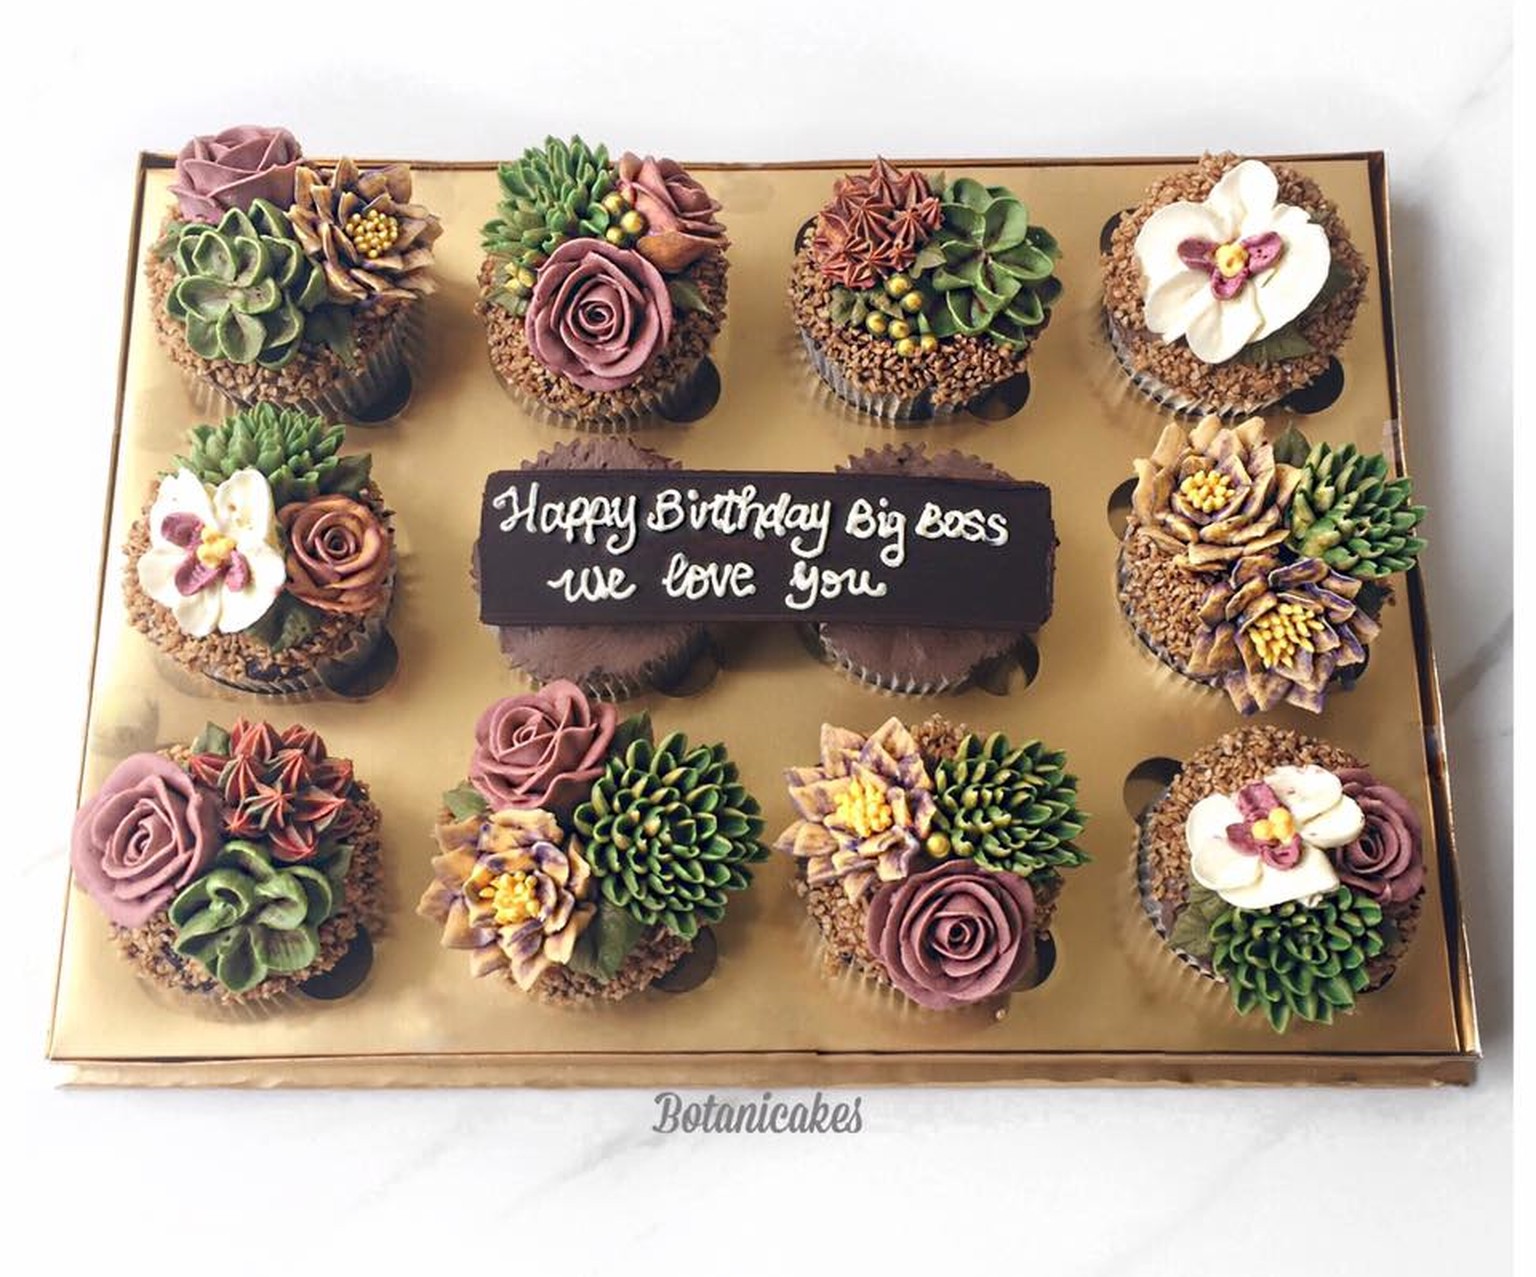 Cupcakes Pflanze Kakteen
https://www.instagram.com/botanicakes/